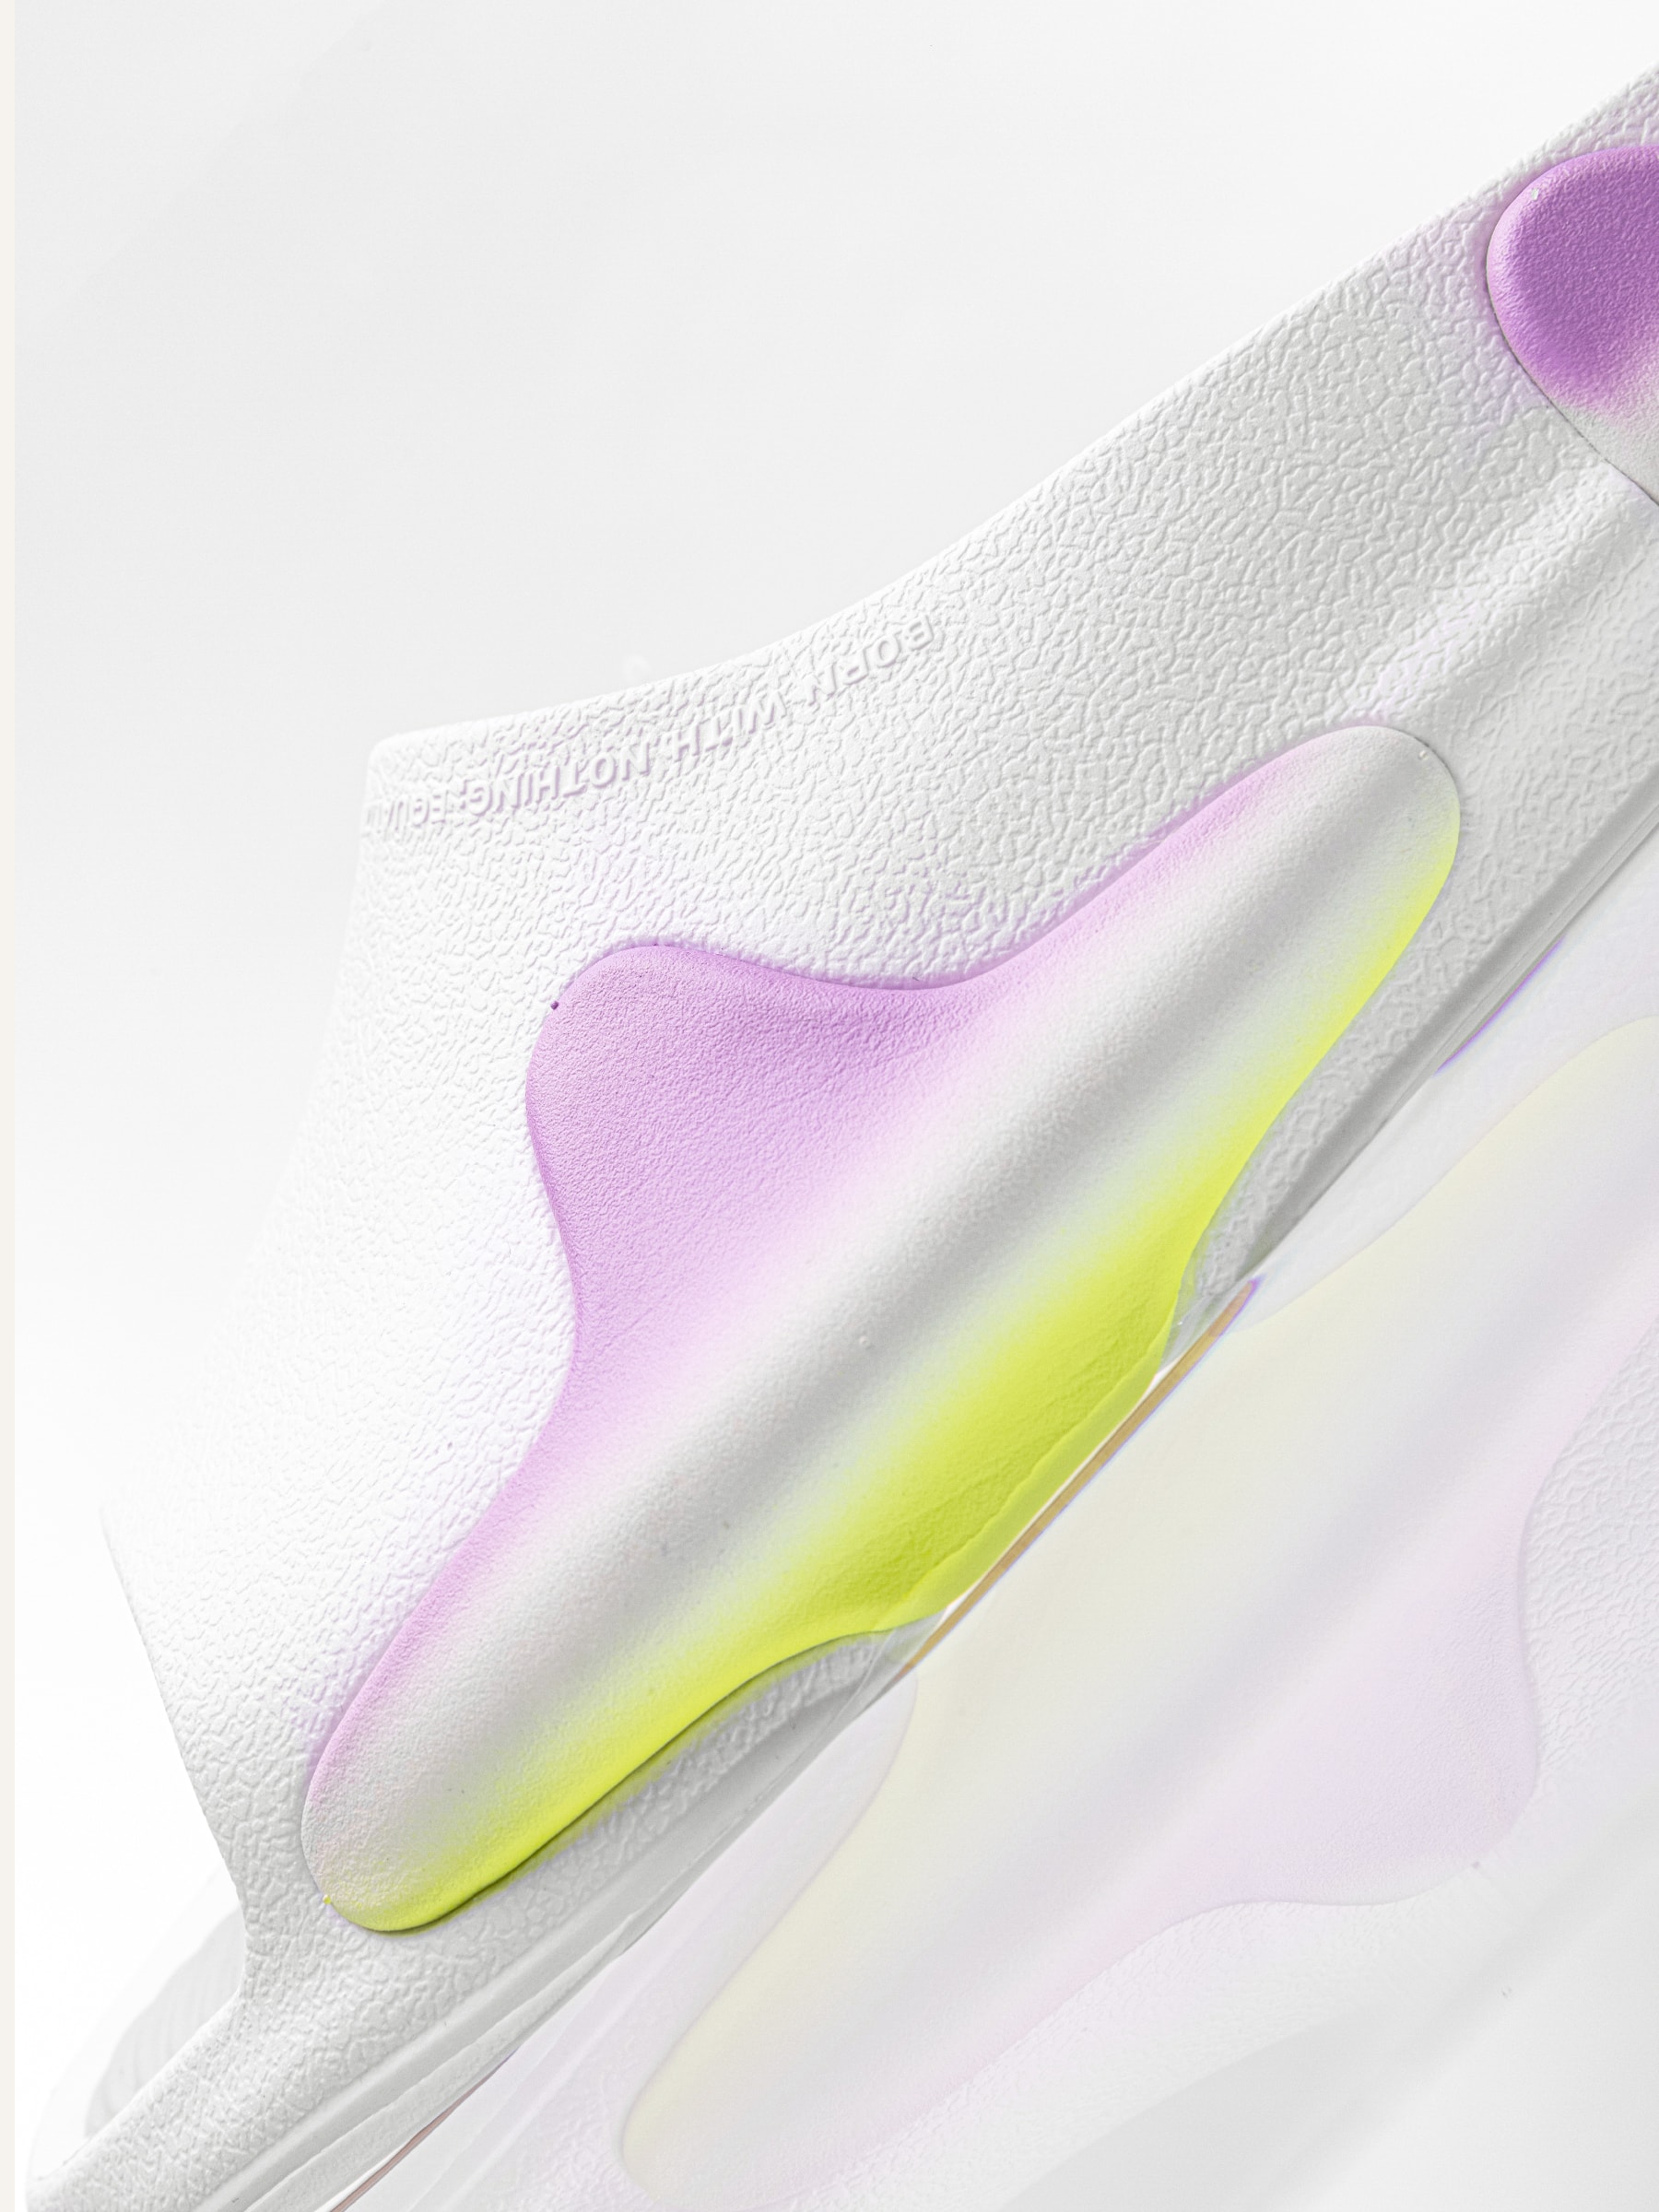 EQUALIZER OASIS 拖鞋推出全新白紫绿限定配色